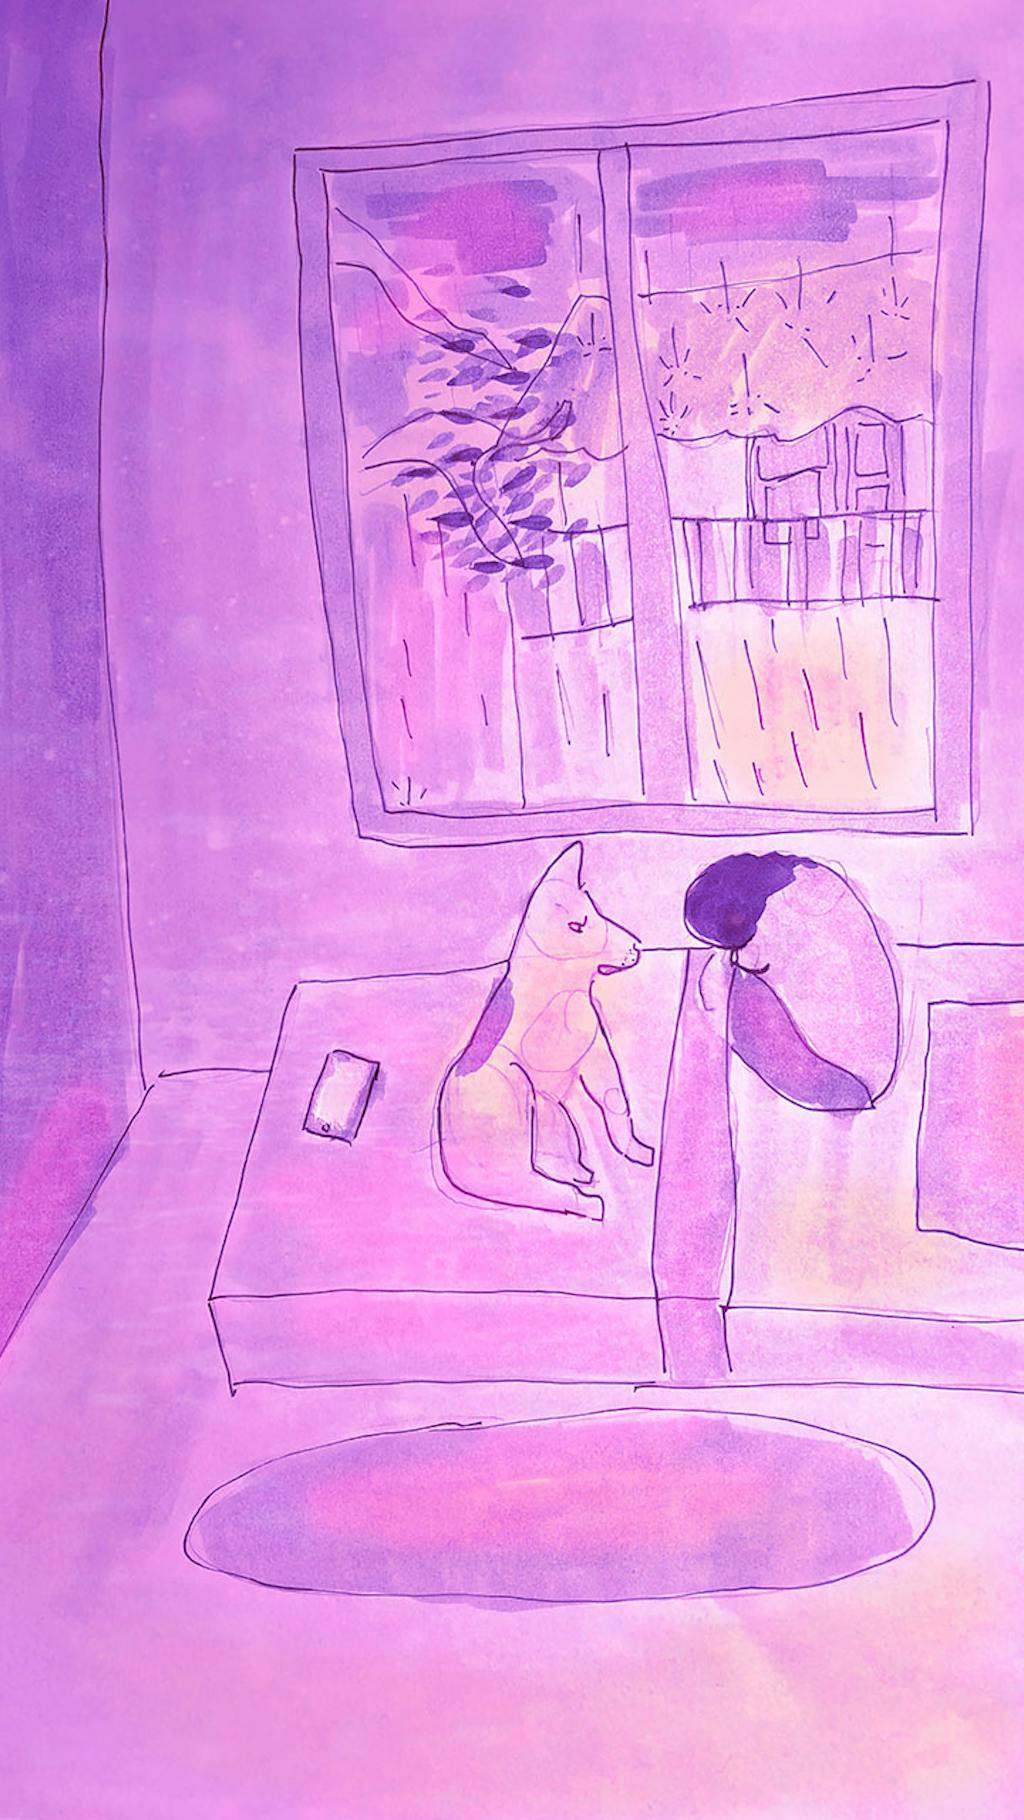 Garitma, fondo de pantalla para celular joven en la noche lluviosa con perro, dibujo marcador sobre papel